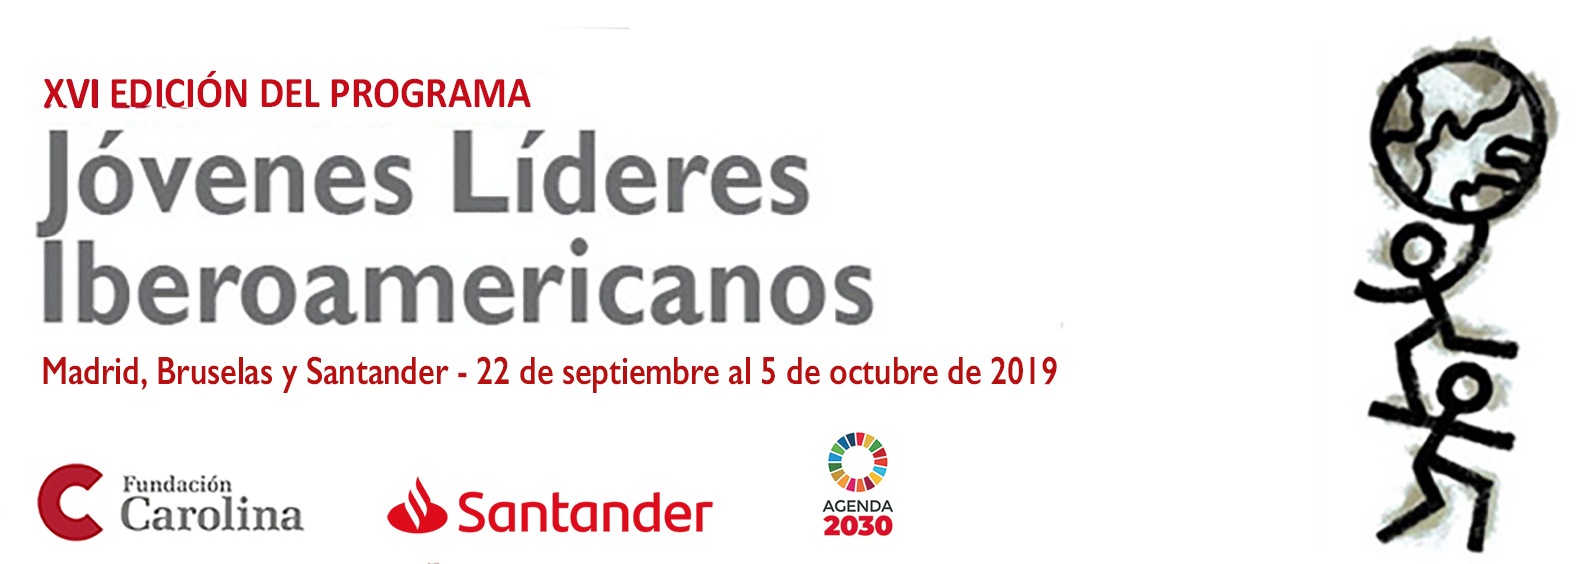 Jovenes Lideres Iberoamericanos 2019 Fundacion Carolina